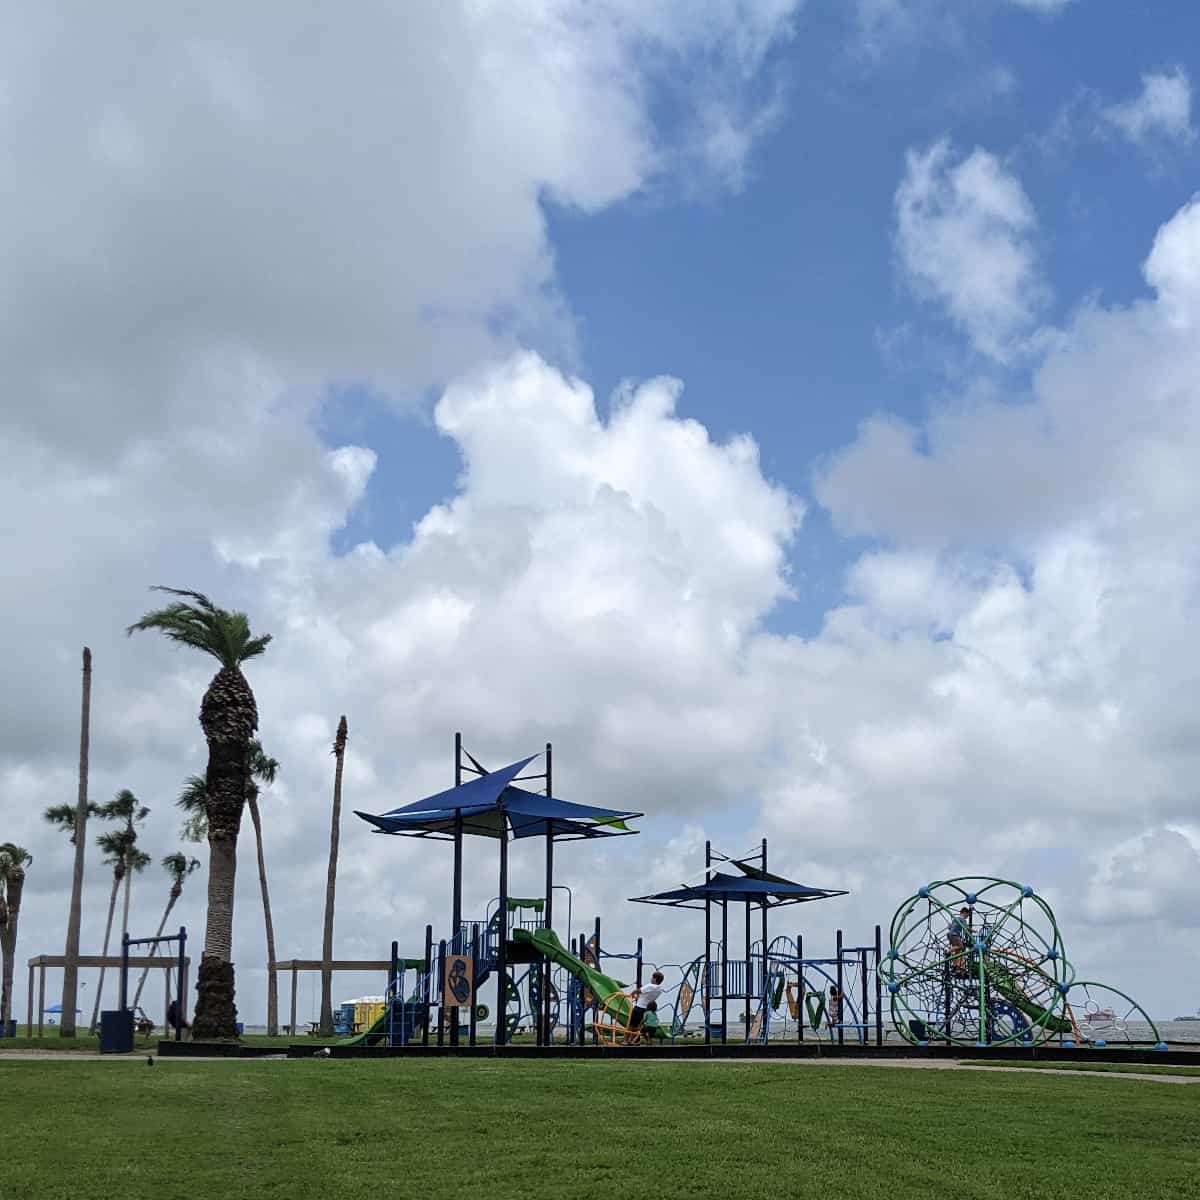 Seawolf Park Playground